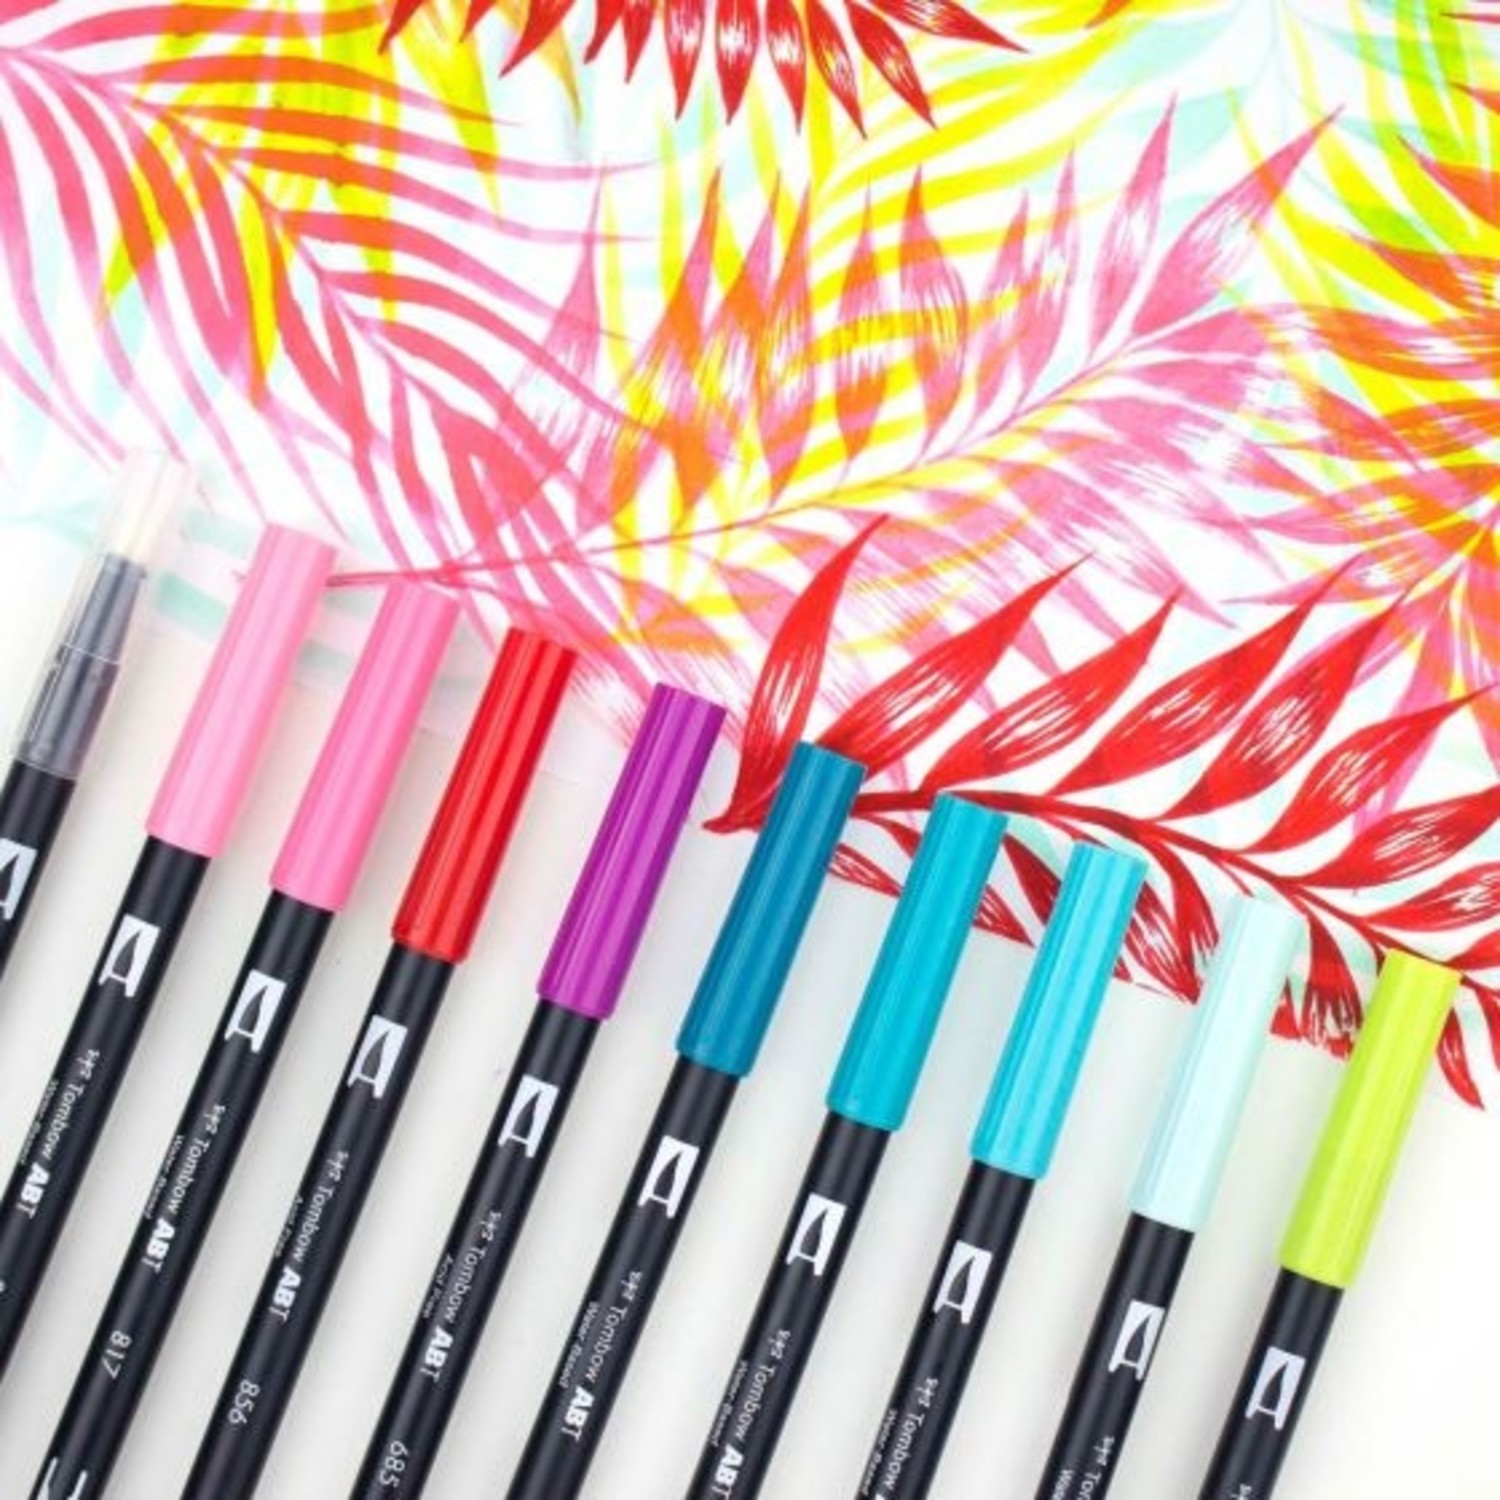 https://cdn.shoplightspeed.com/shops/635248/files/20737892/1500x4000x3/tombow-dual-brush-10-color-tropical-pen-set.jpg